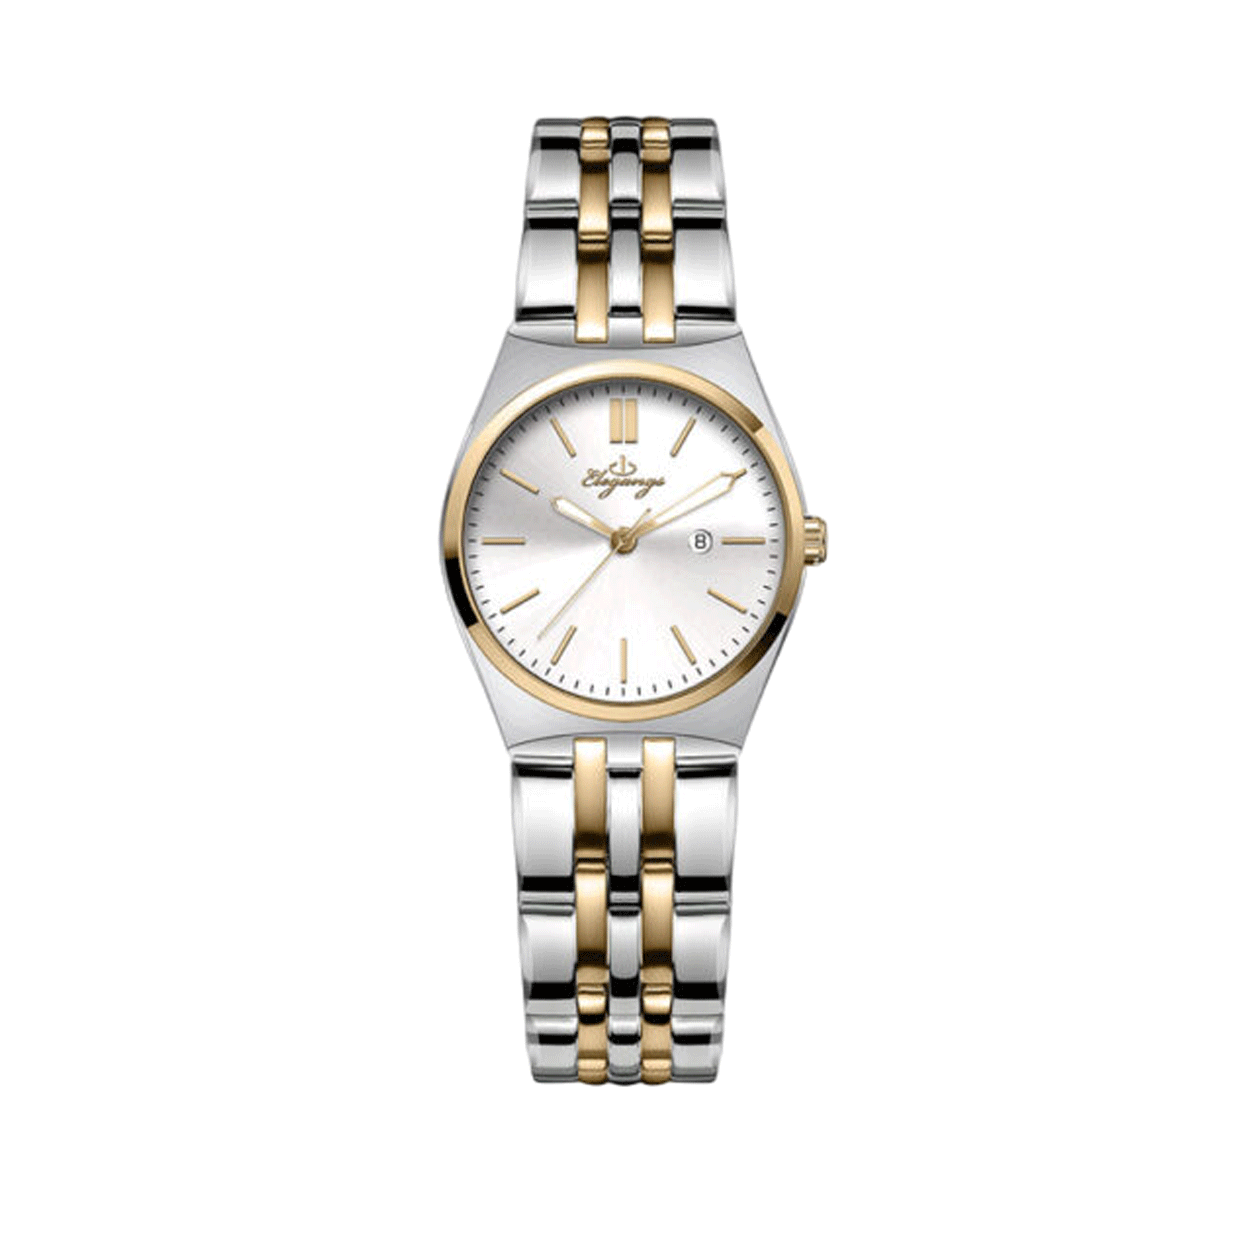 ساعت الگنگس مدل SP8265-107 زنانه